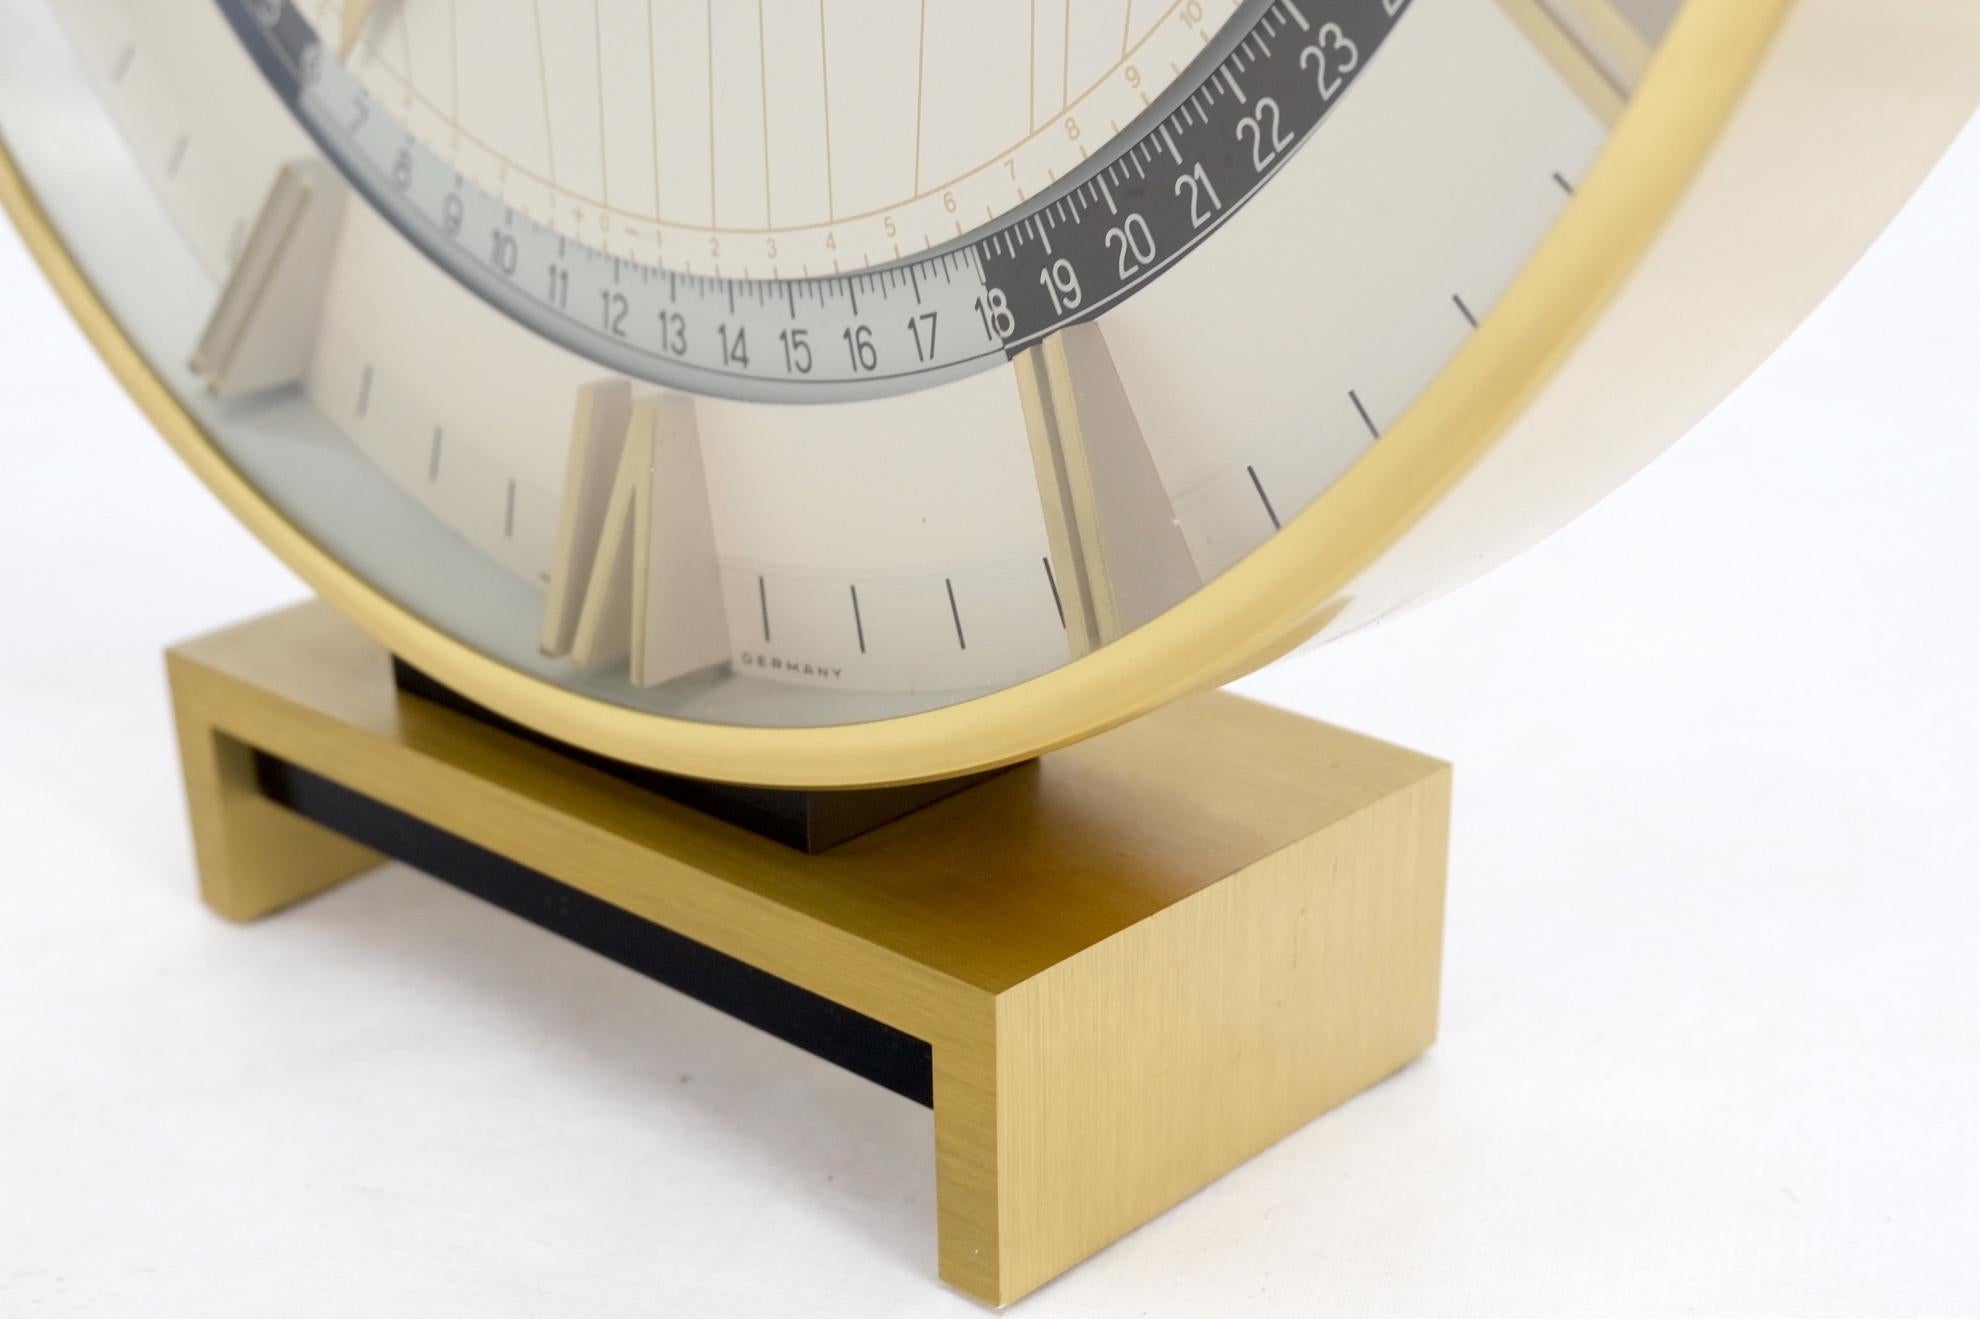 Big Machined Brass Kienzle Modernist Table World Time Zone Clock 1960 For Sale 3